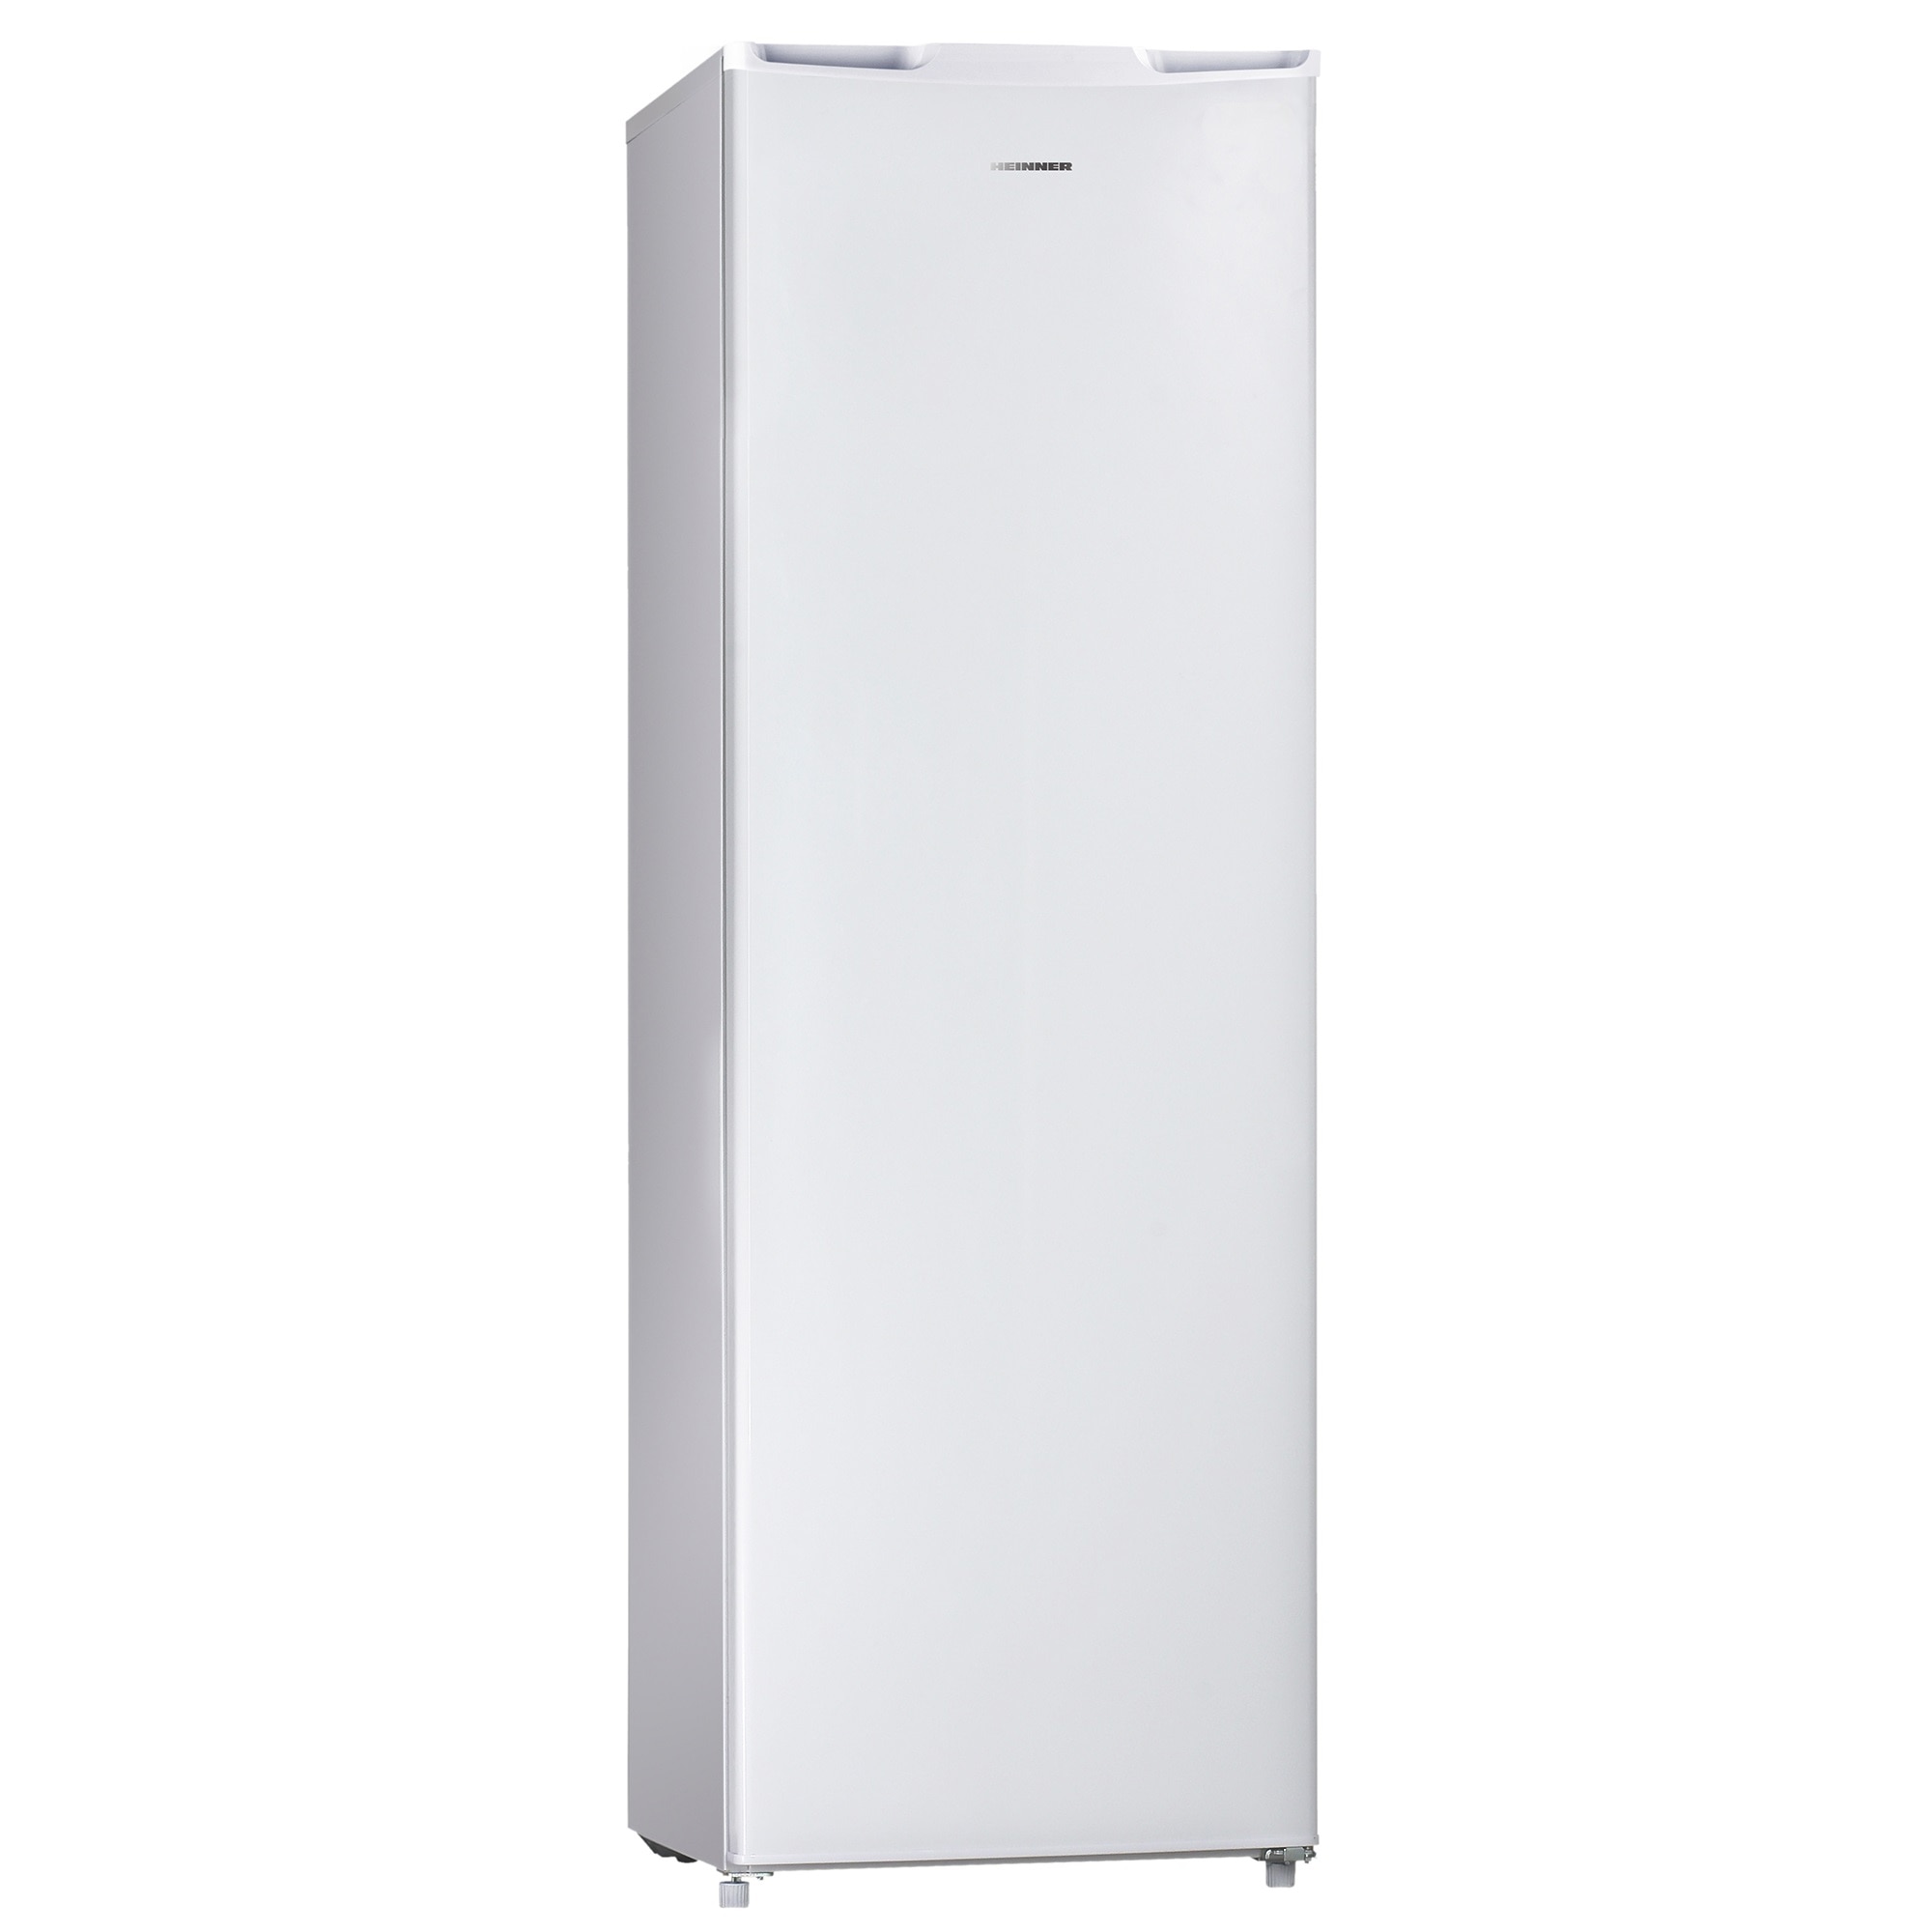 Хладилник Heinner HF-250A+ с обем от 250 л.